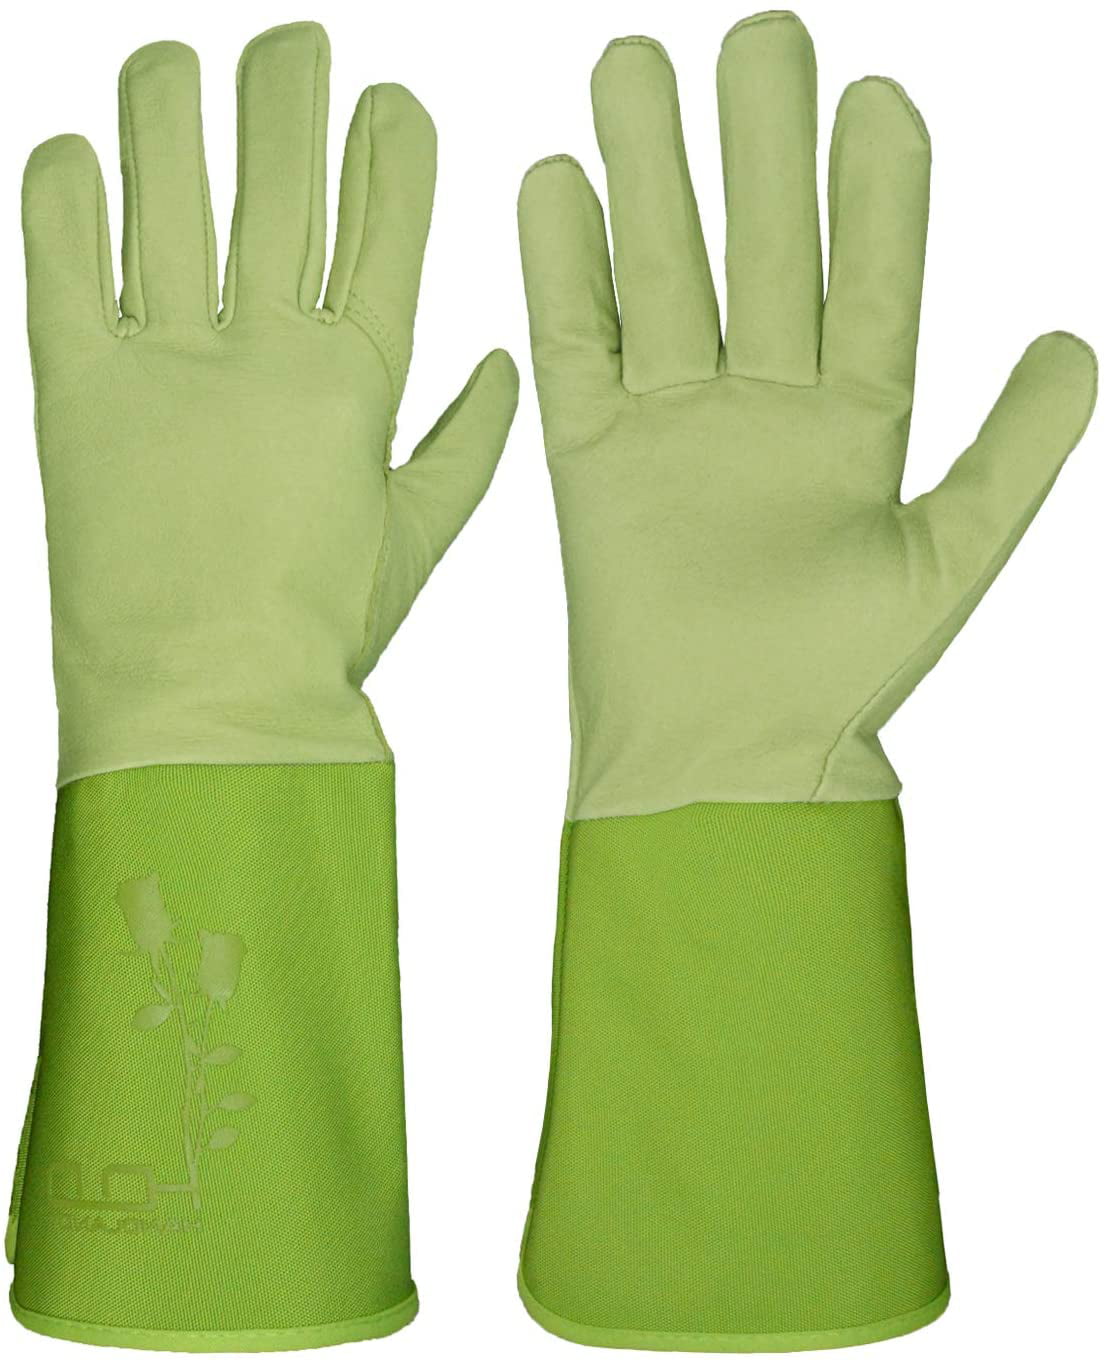 Pigskin Leather Gardening Gloves Rose Pruning Long Cuff Thornproof Work Gloves 